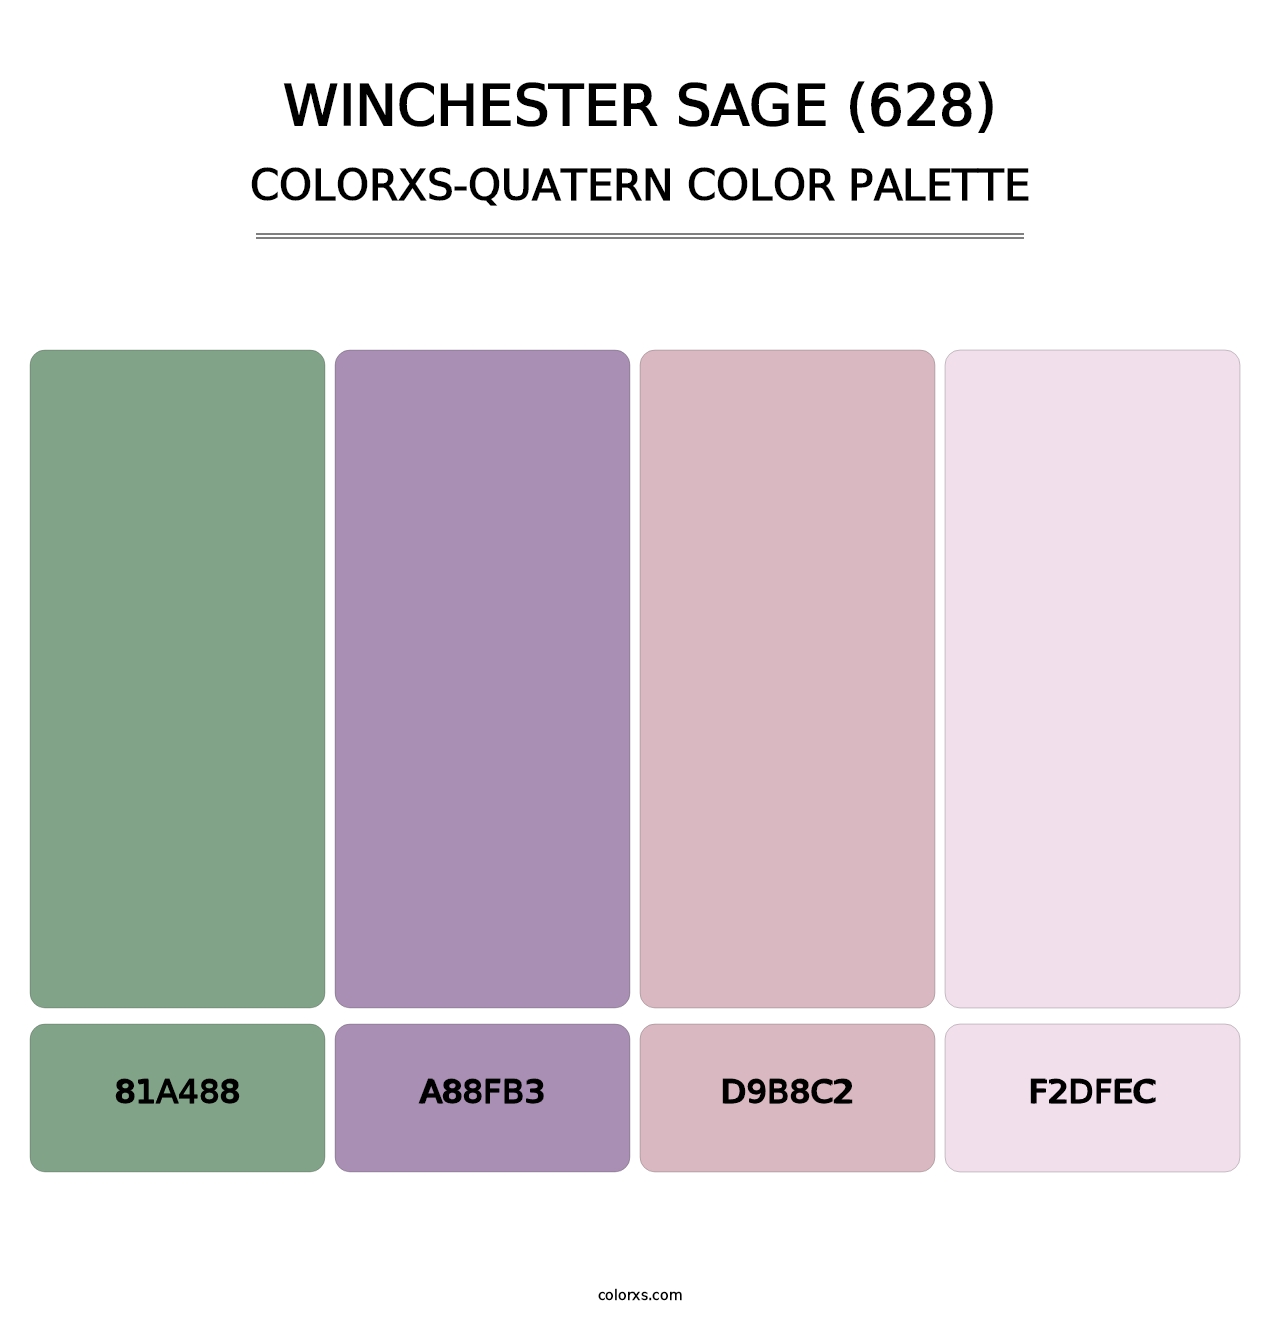 Winchester Sage (628) - Colorxs Quatern Palette